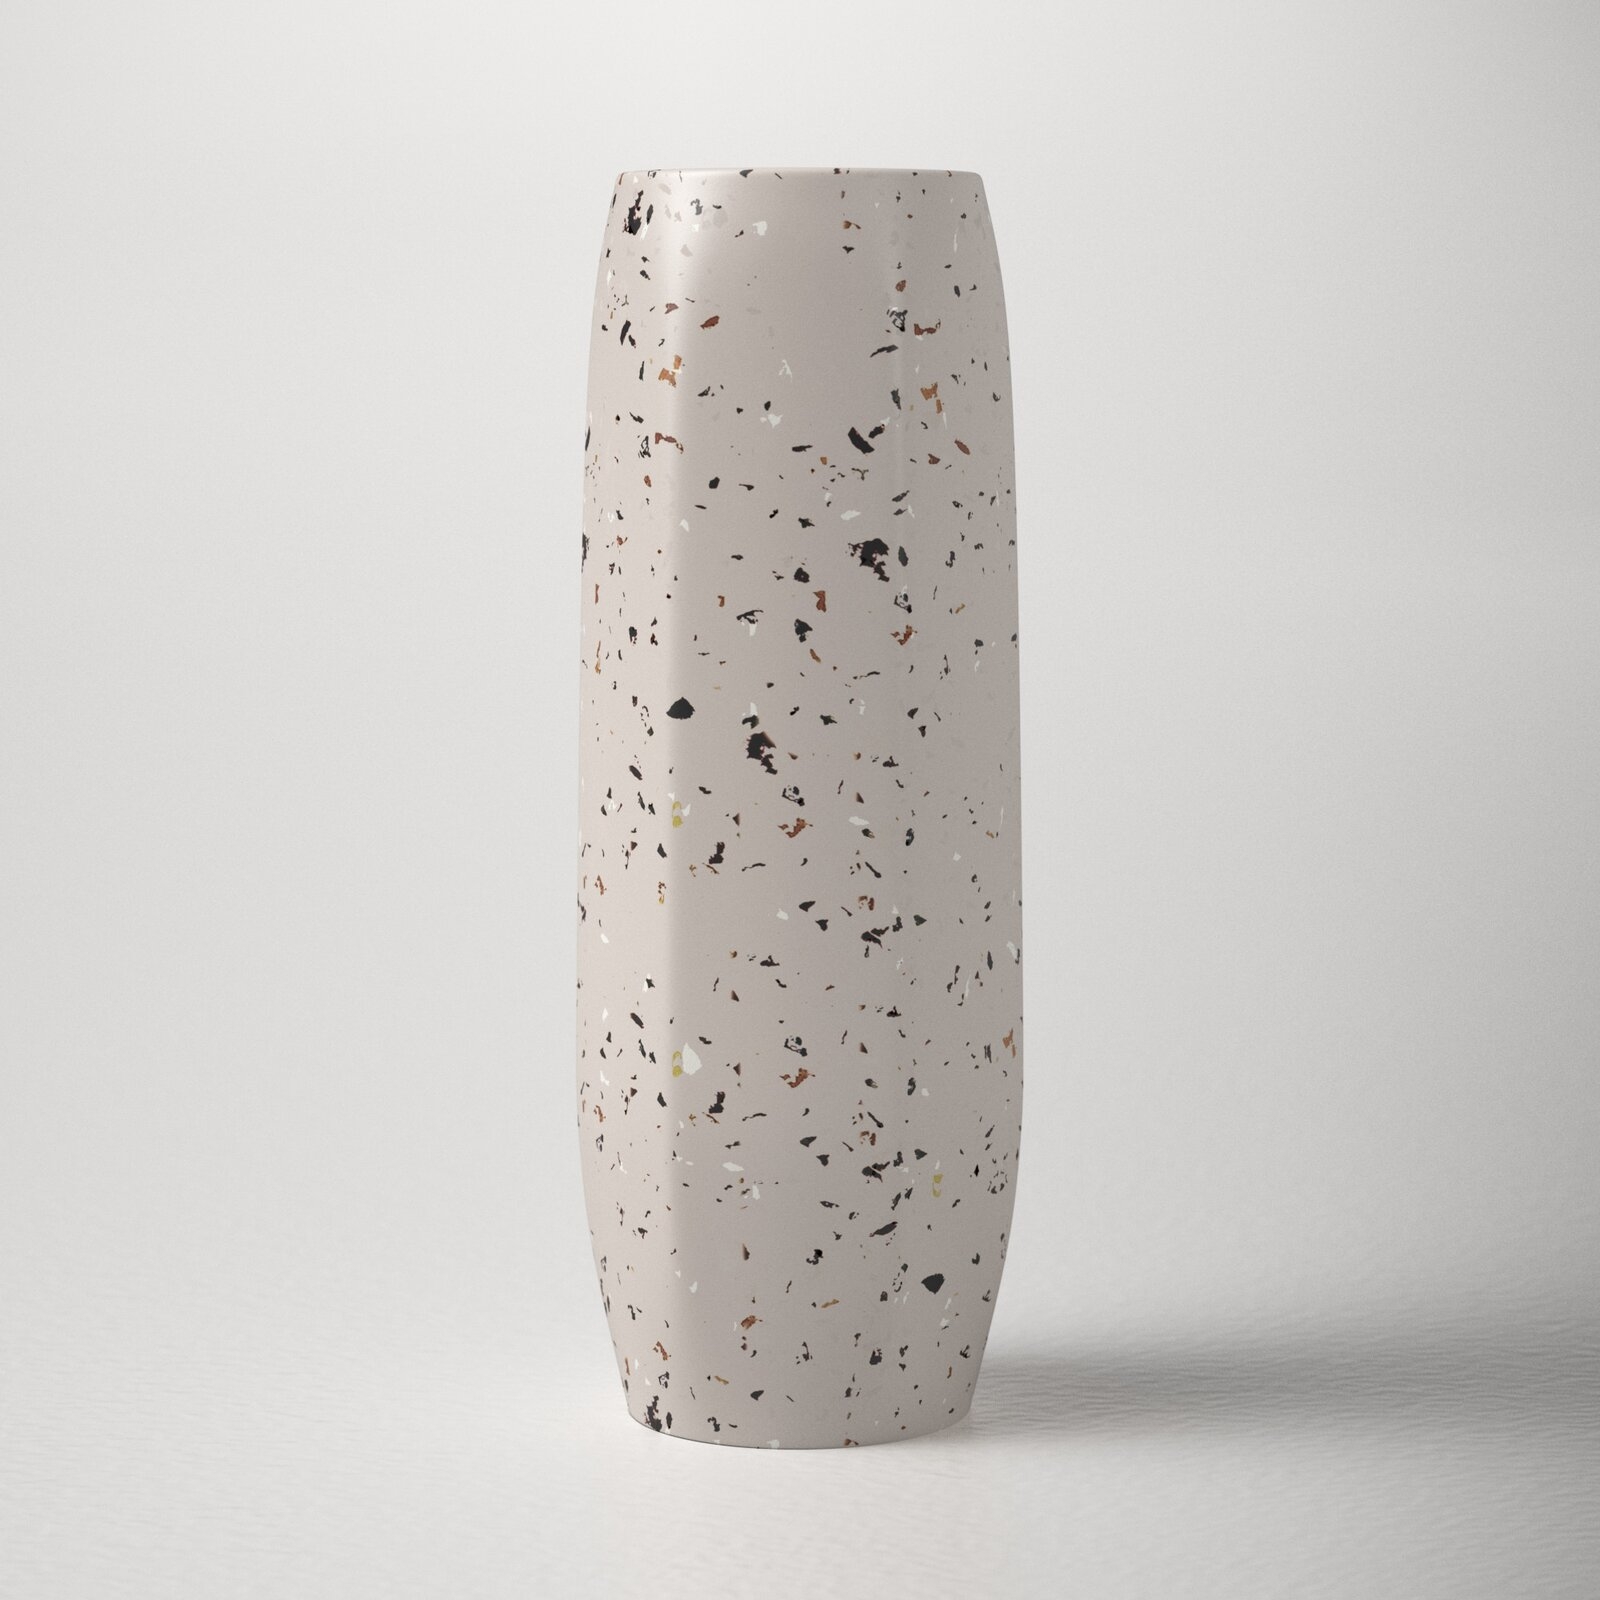 Bay White Concrete Table Vase - Image 0